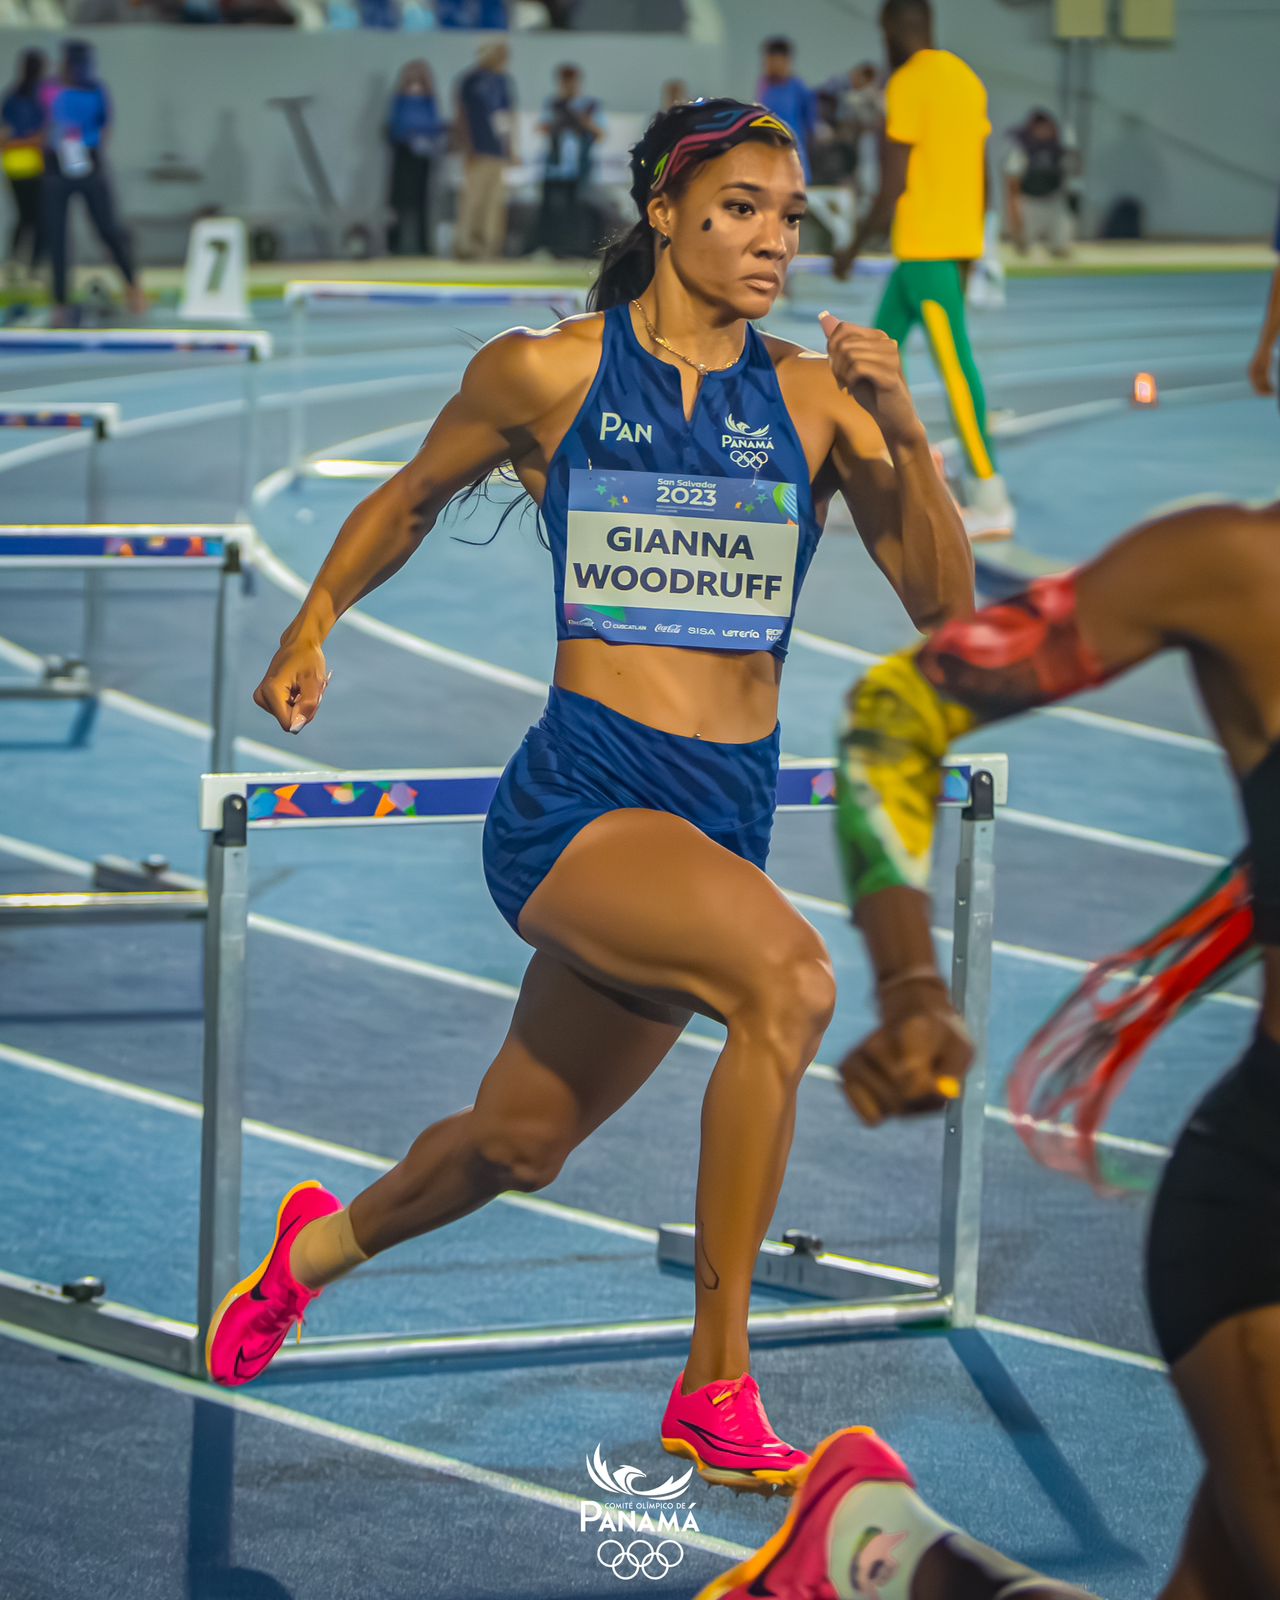 Gianna Woodruff avanzó a semifinales en el mundial de atletismo